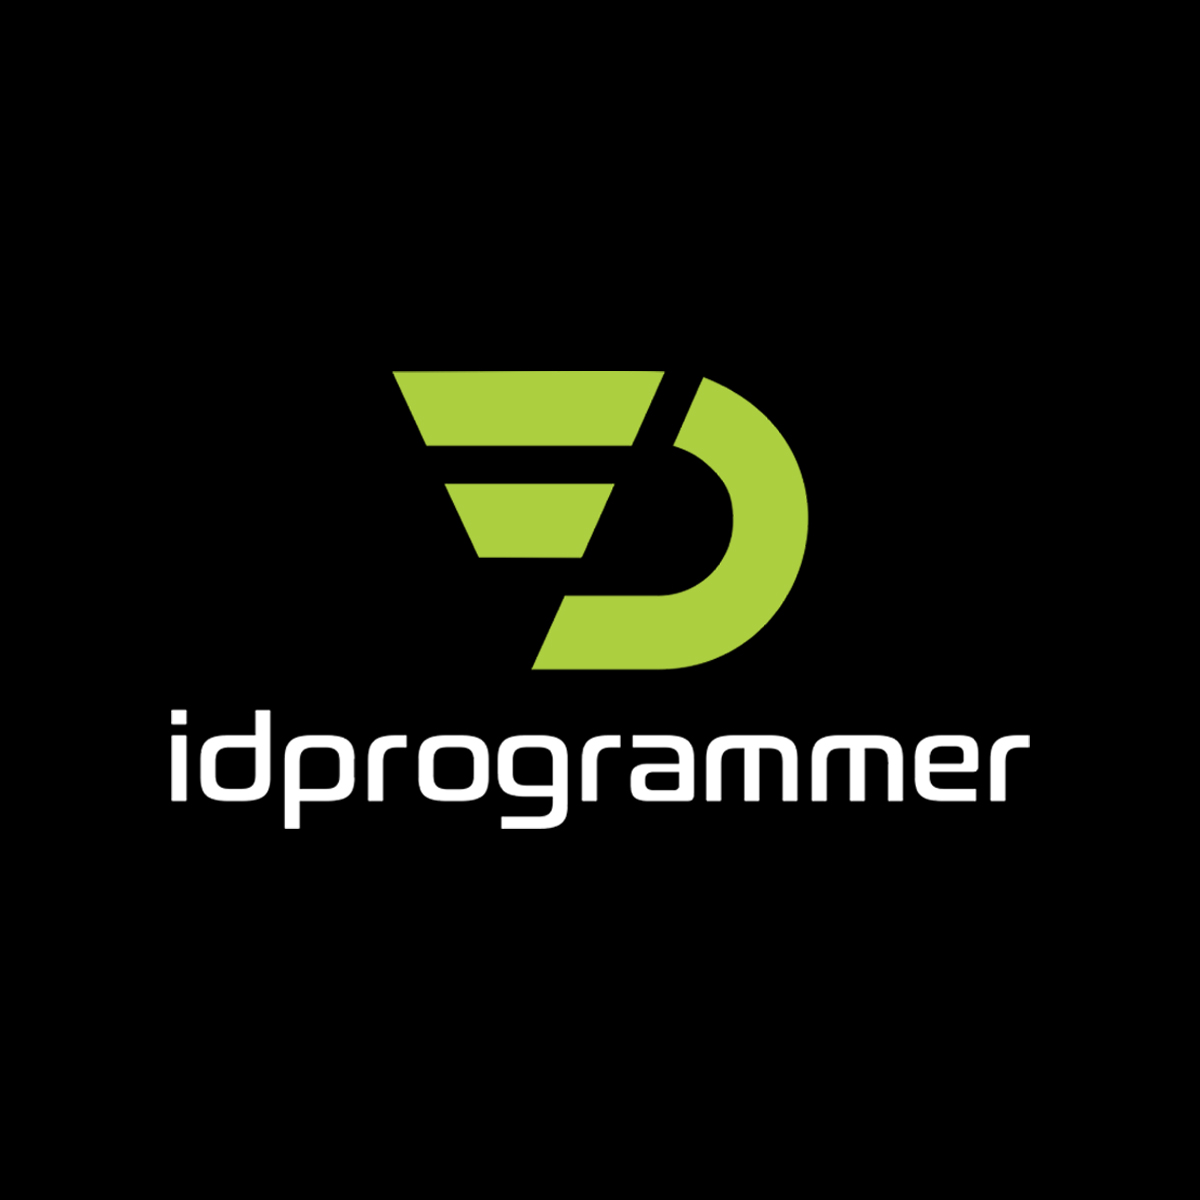 (c) Idprogrammer.com